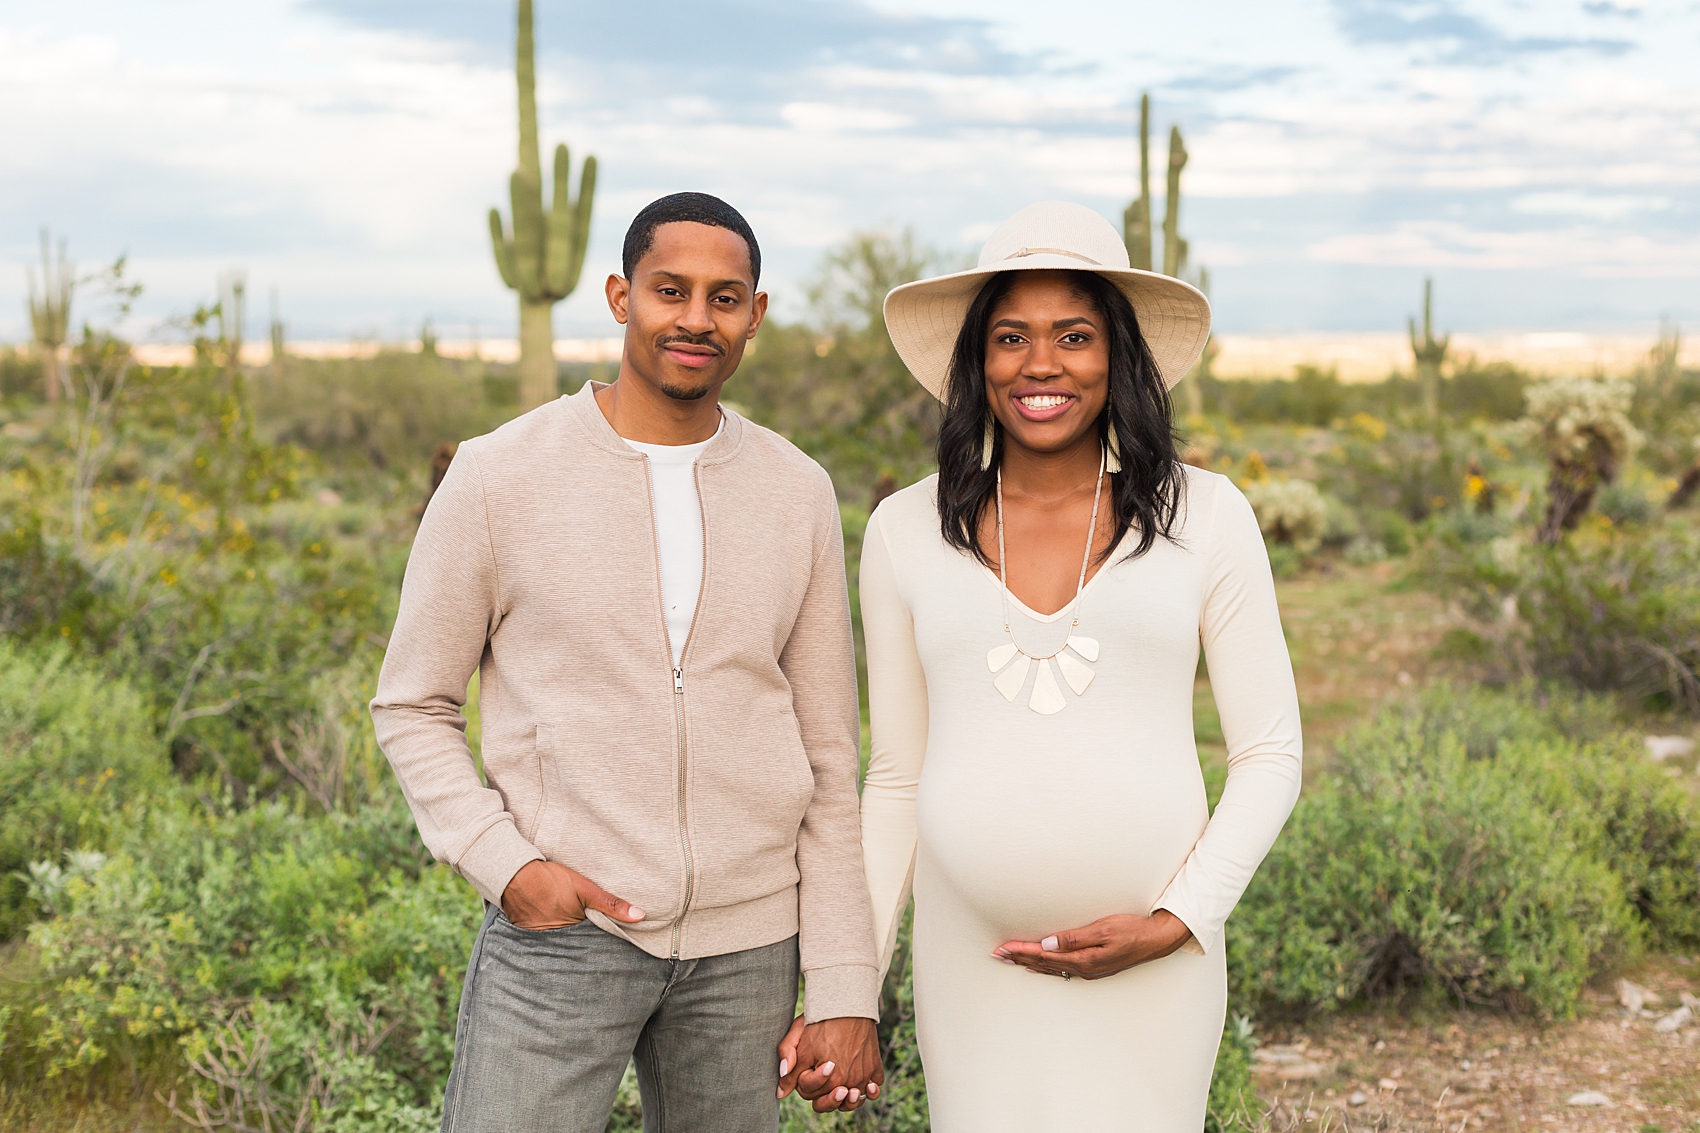 Leah Hope Photography | Scottsdale Phoenix Arizona Photographer | White Tank Mountains Regional Park | Desert Landscape Cactus Scenery | Maternity Photos | Pregnancy Pictures